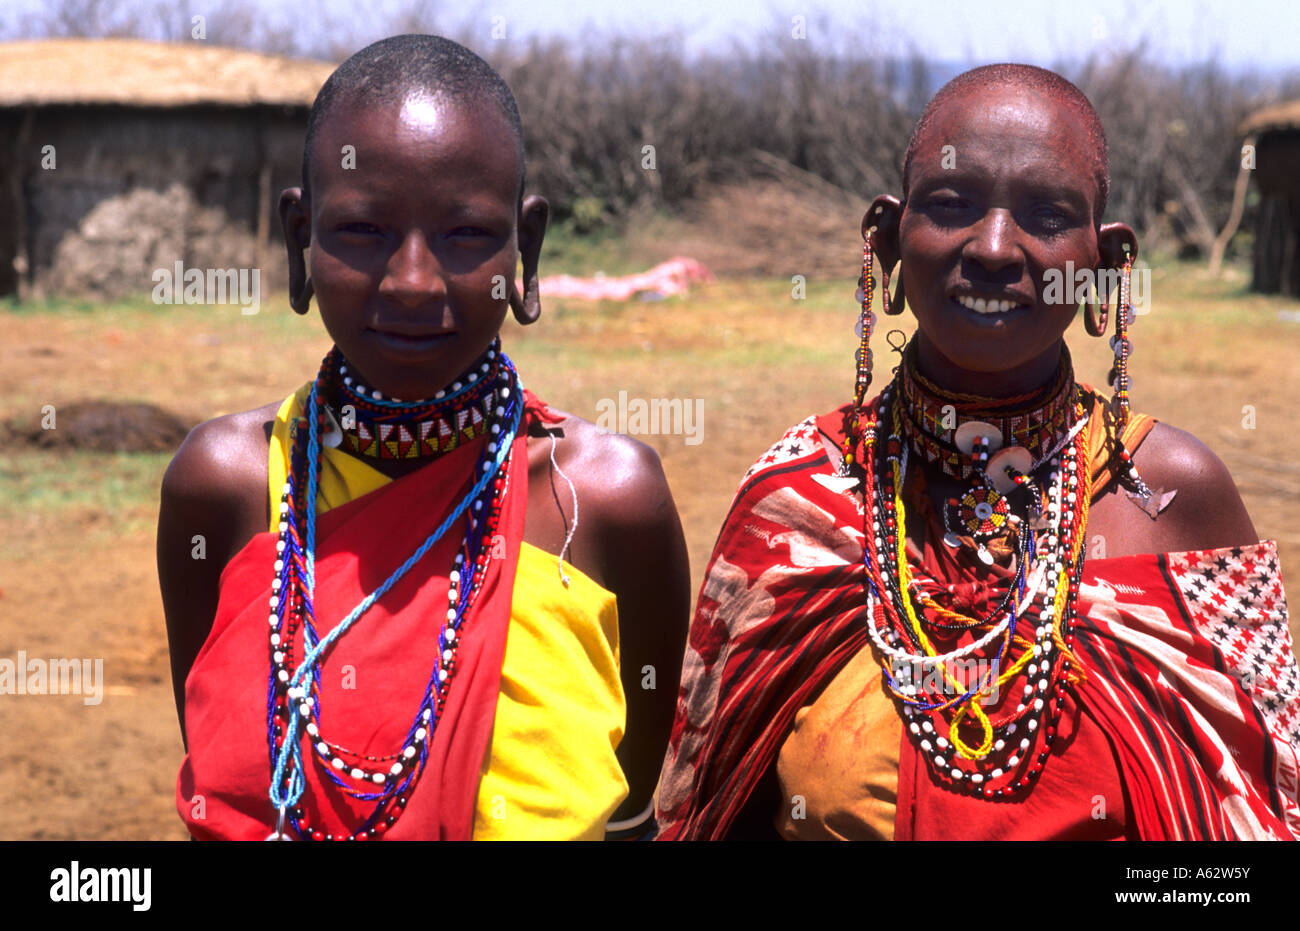 Maasai tribe dark women in costume traditional dress in jungles near Kenya Africa Stock Photo